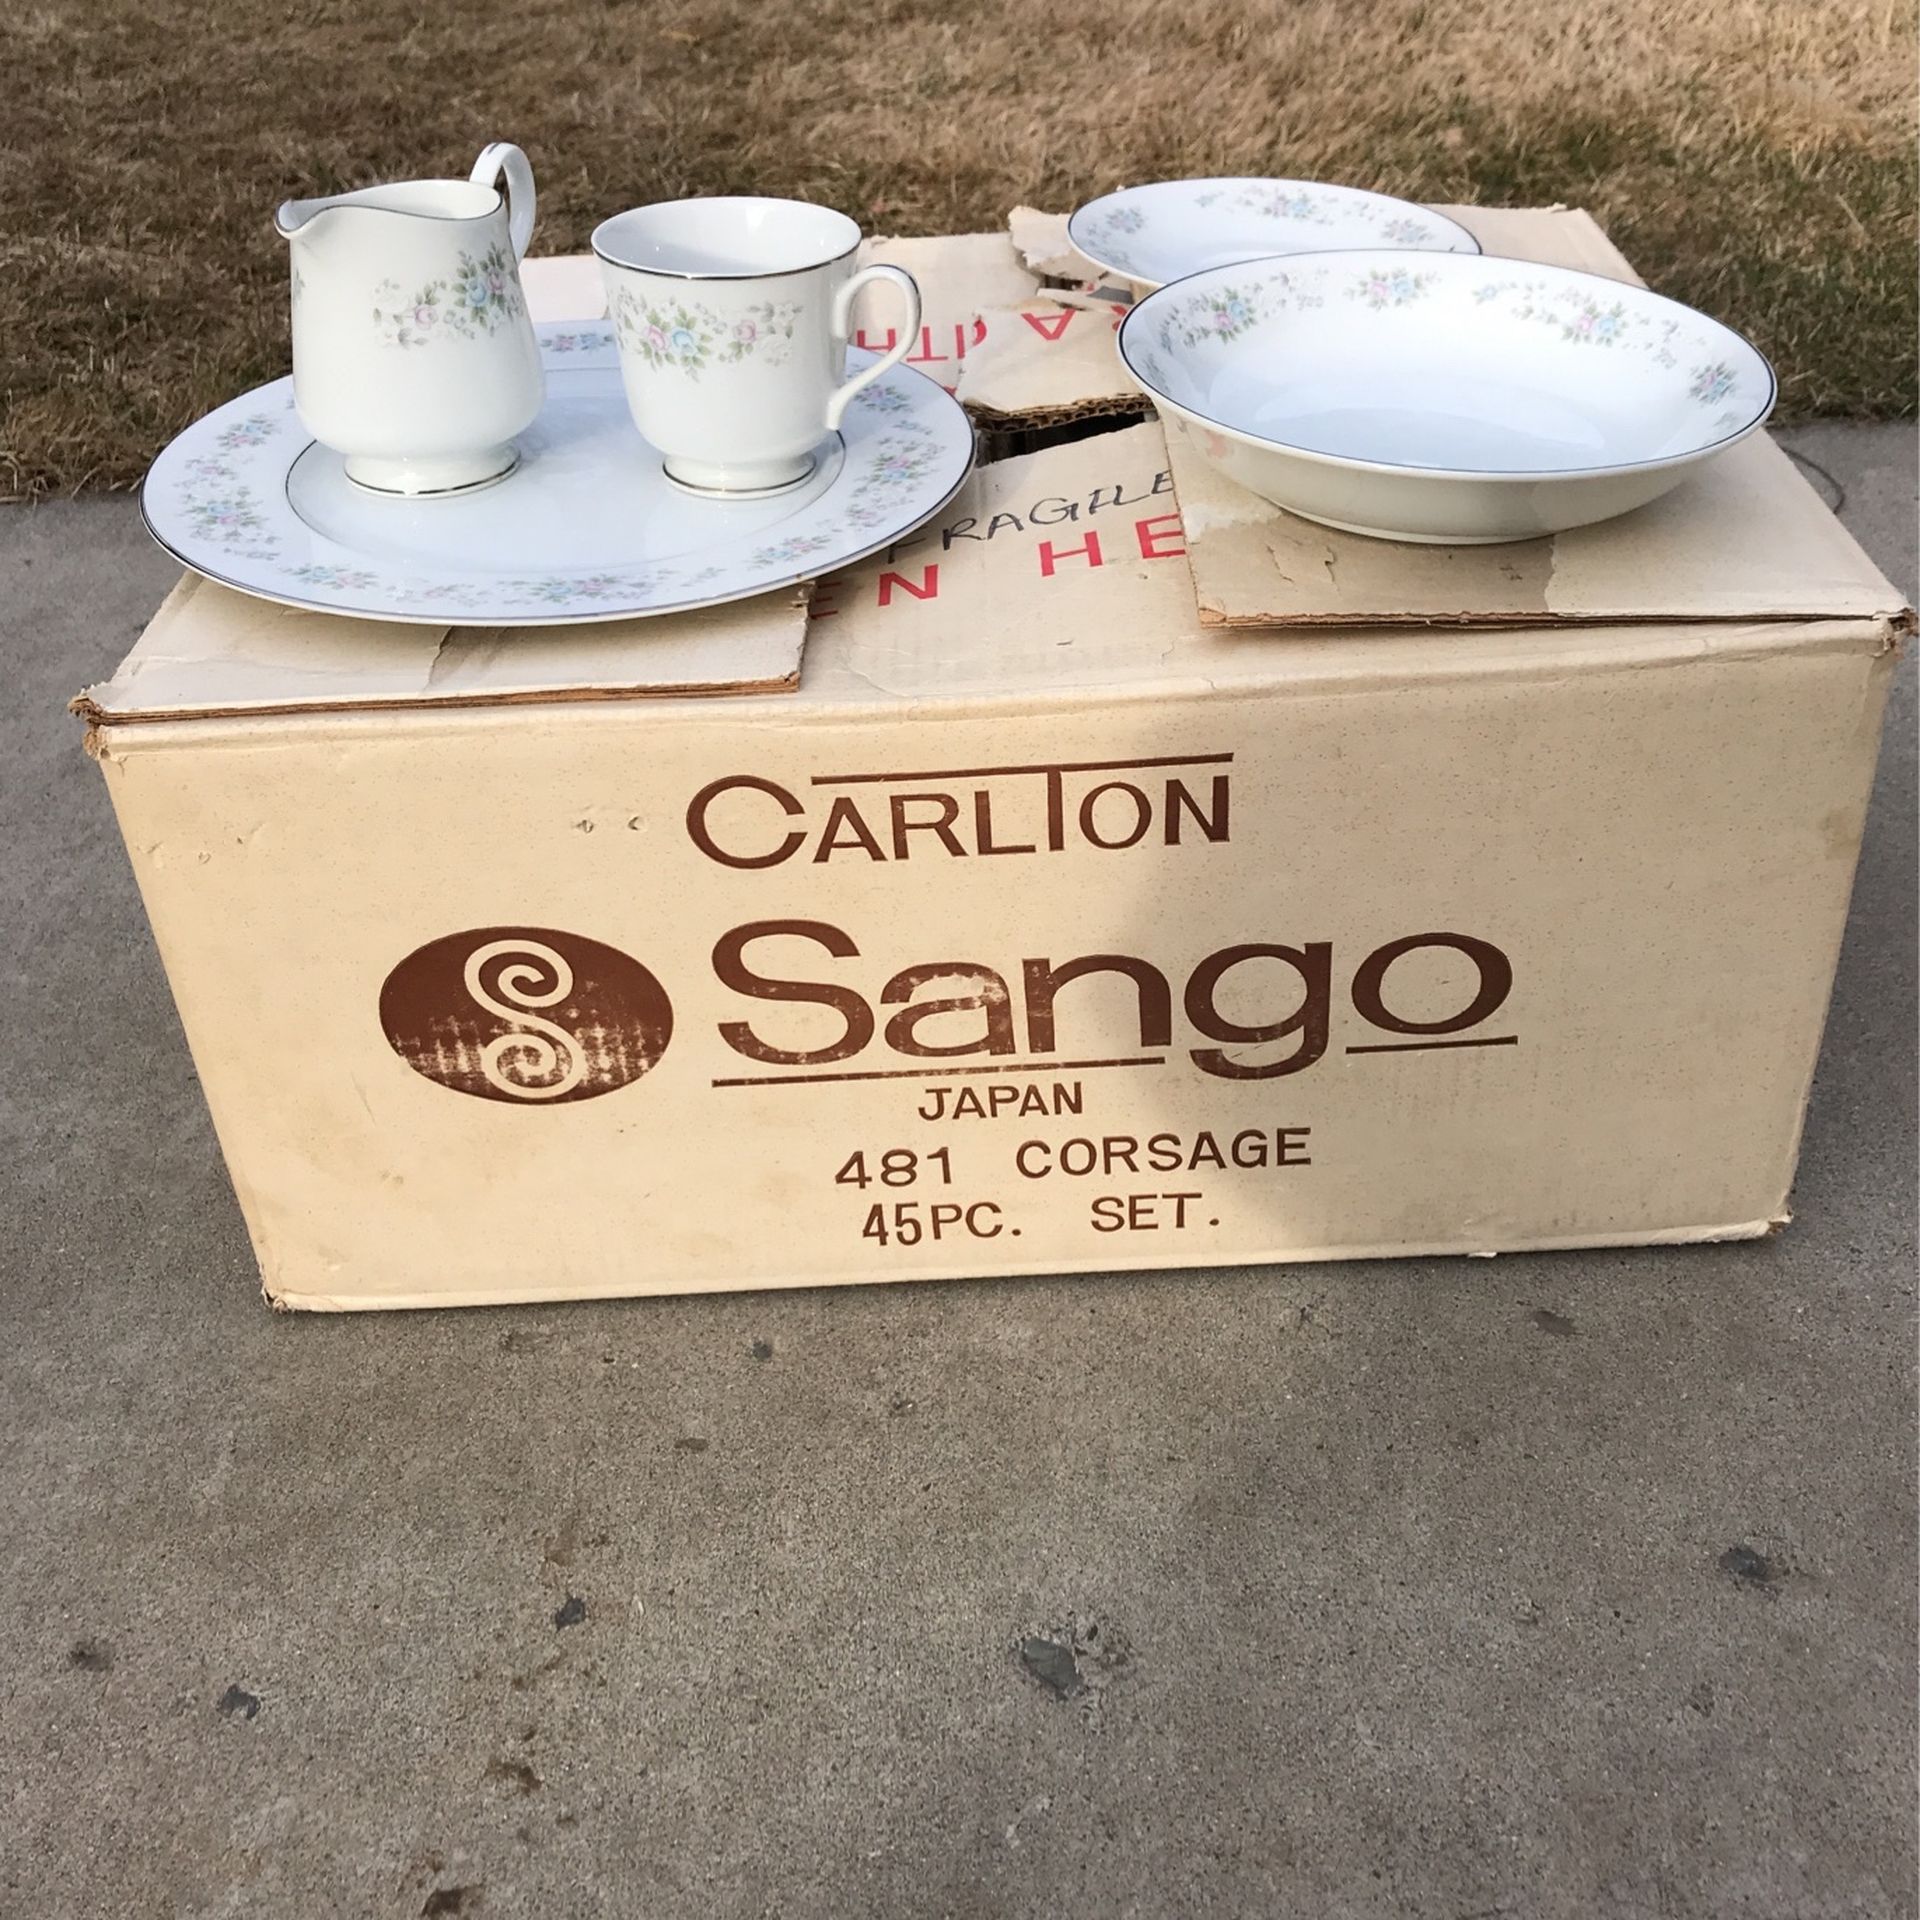 Full set of Carlton China